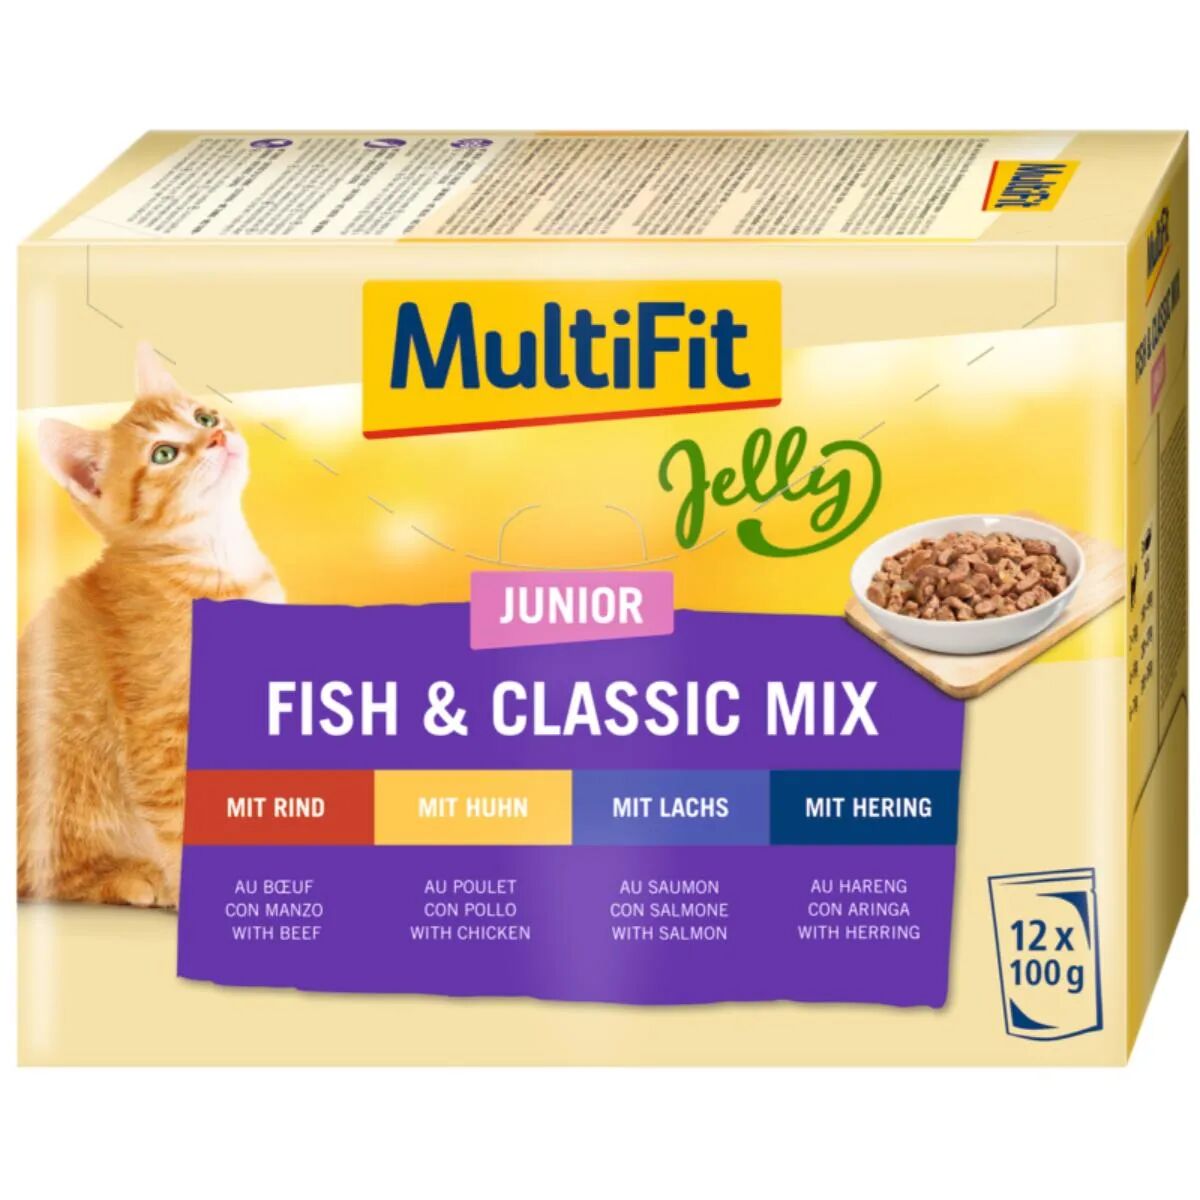 MULTIFIT Jelly Junior Busta Multipack 12x100G MIX CARNE E PESCE